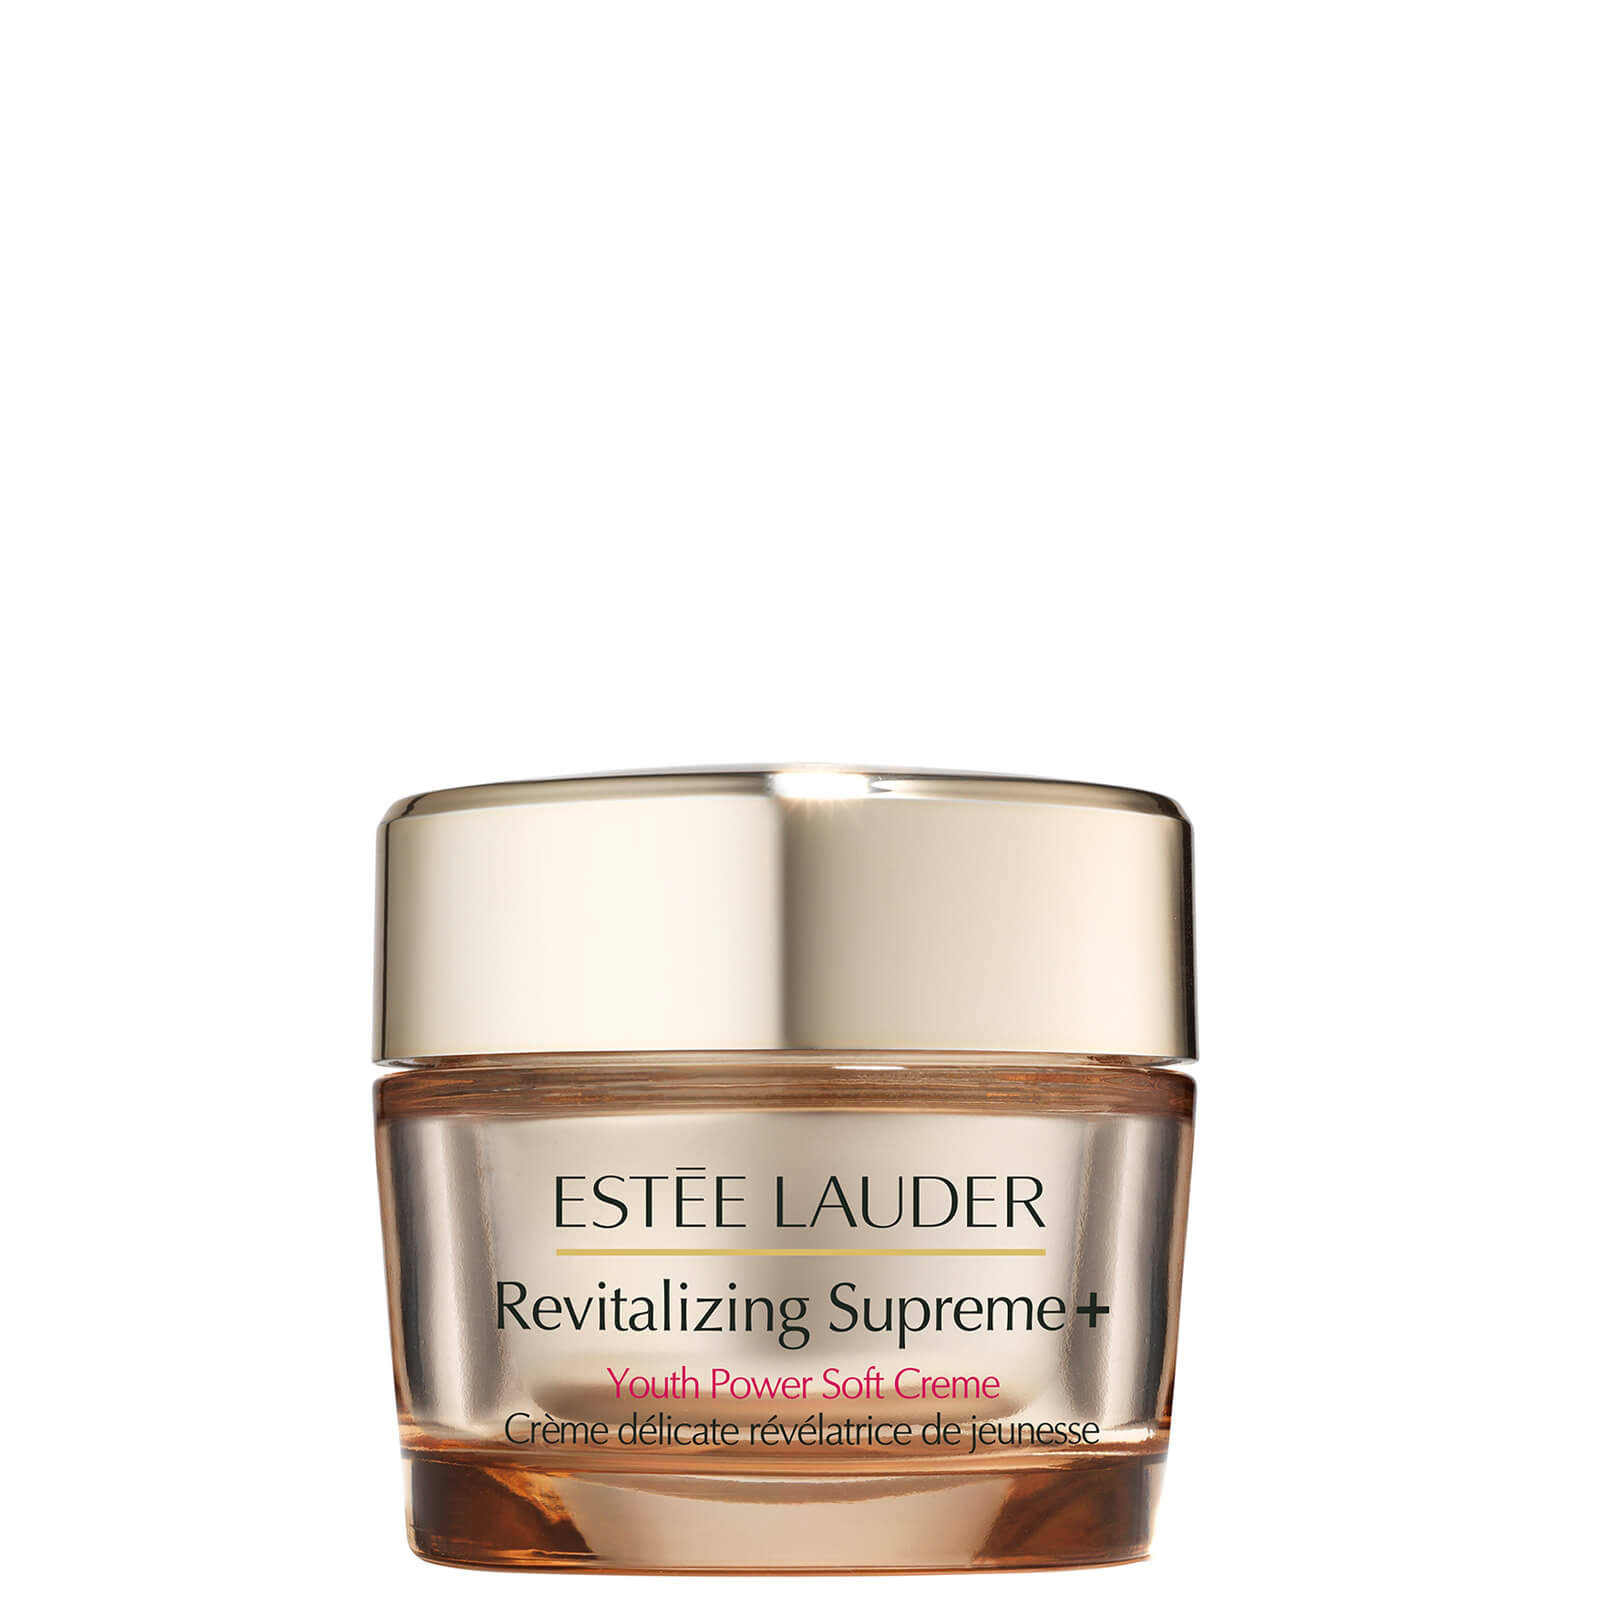 Estee Lauder Revitalizing Supreme + Youth Power Soft Creme 50ml